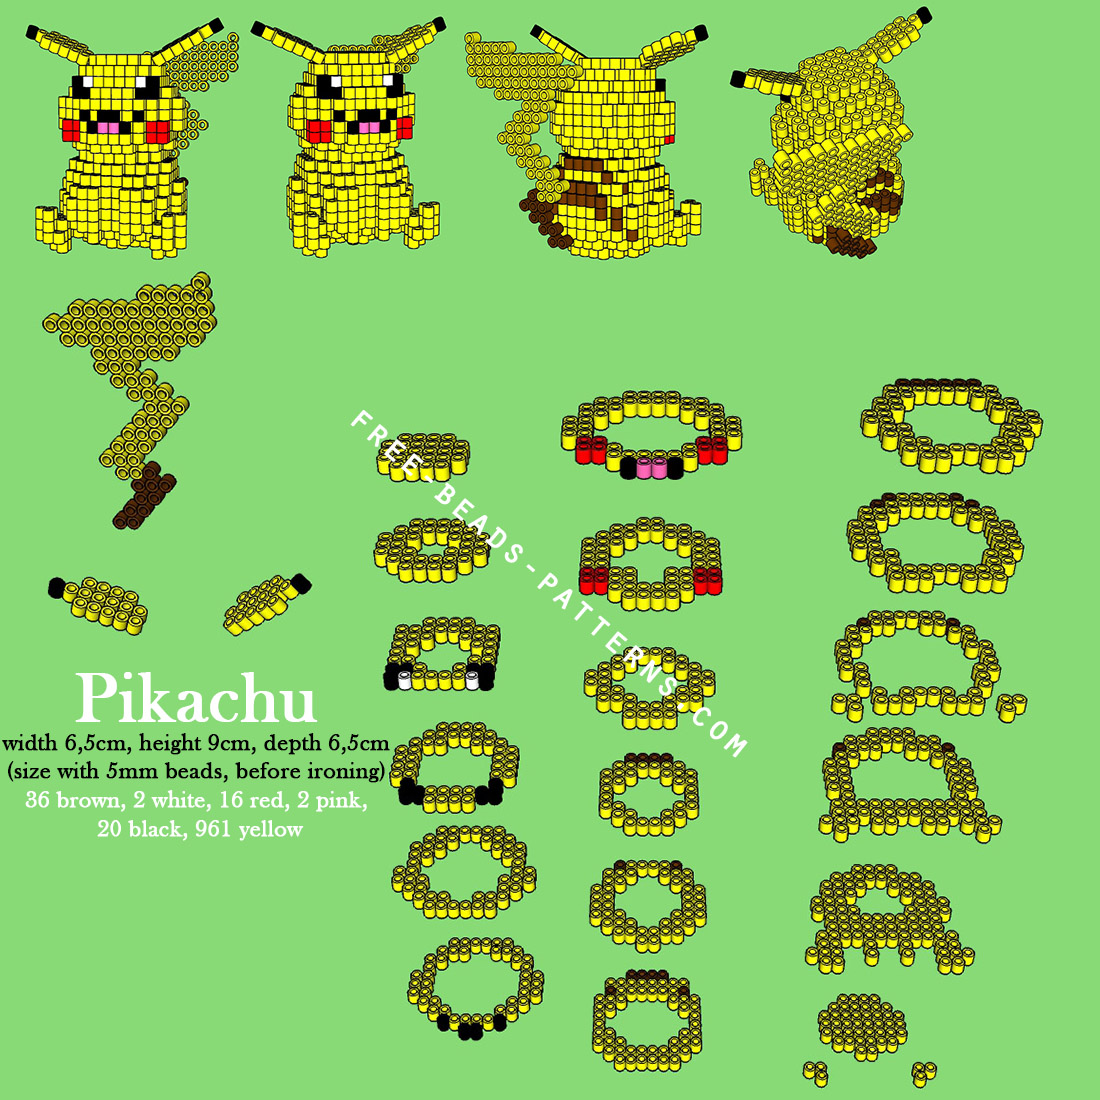 Pikachu Pokemon 3D Perler Beads Hama Beads Pyssla free pattern download